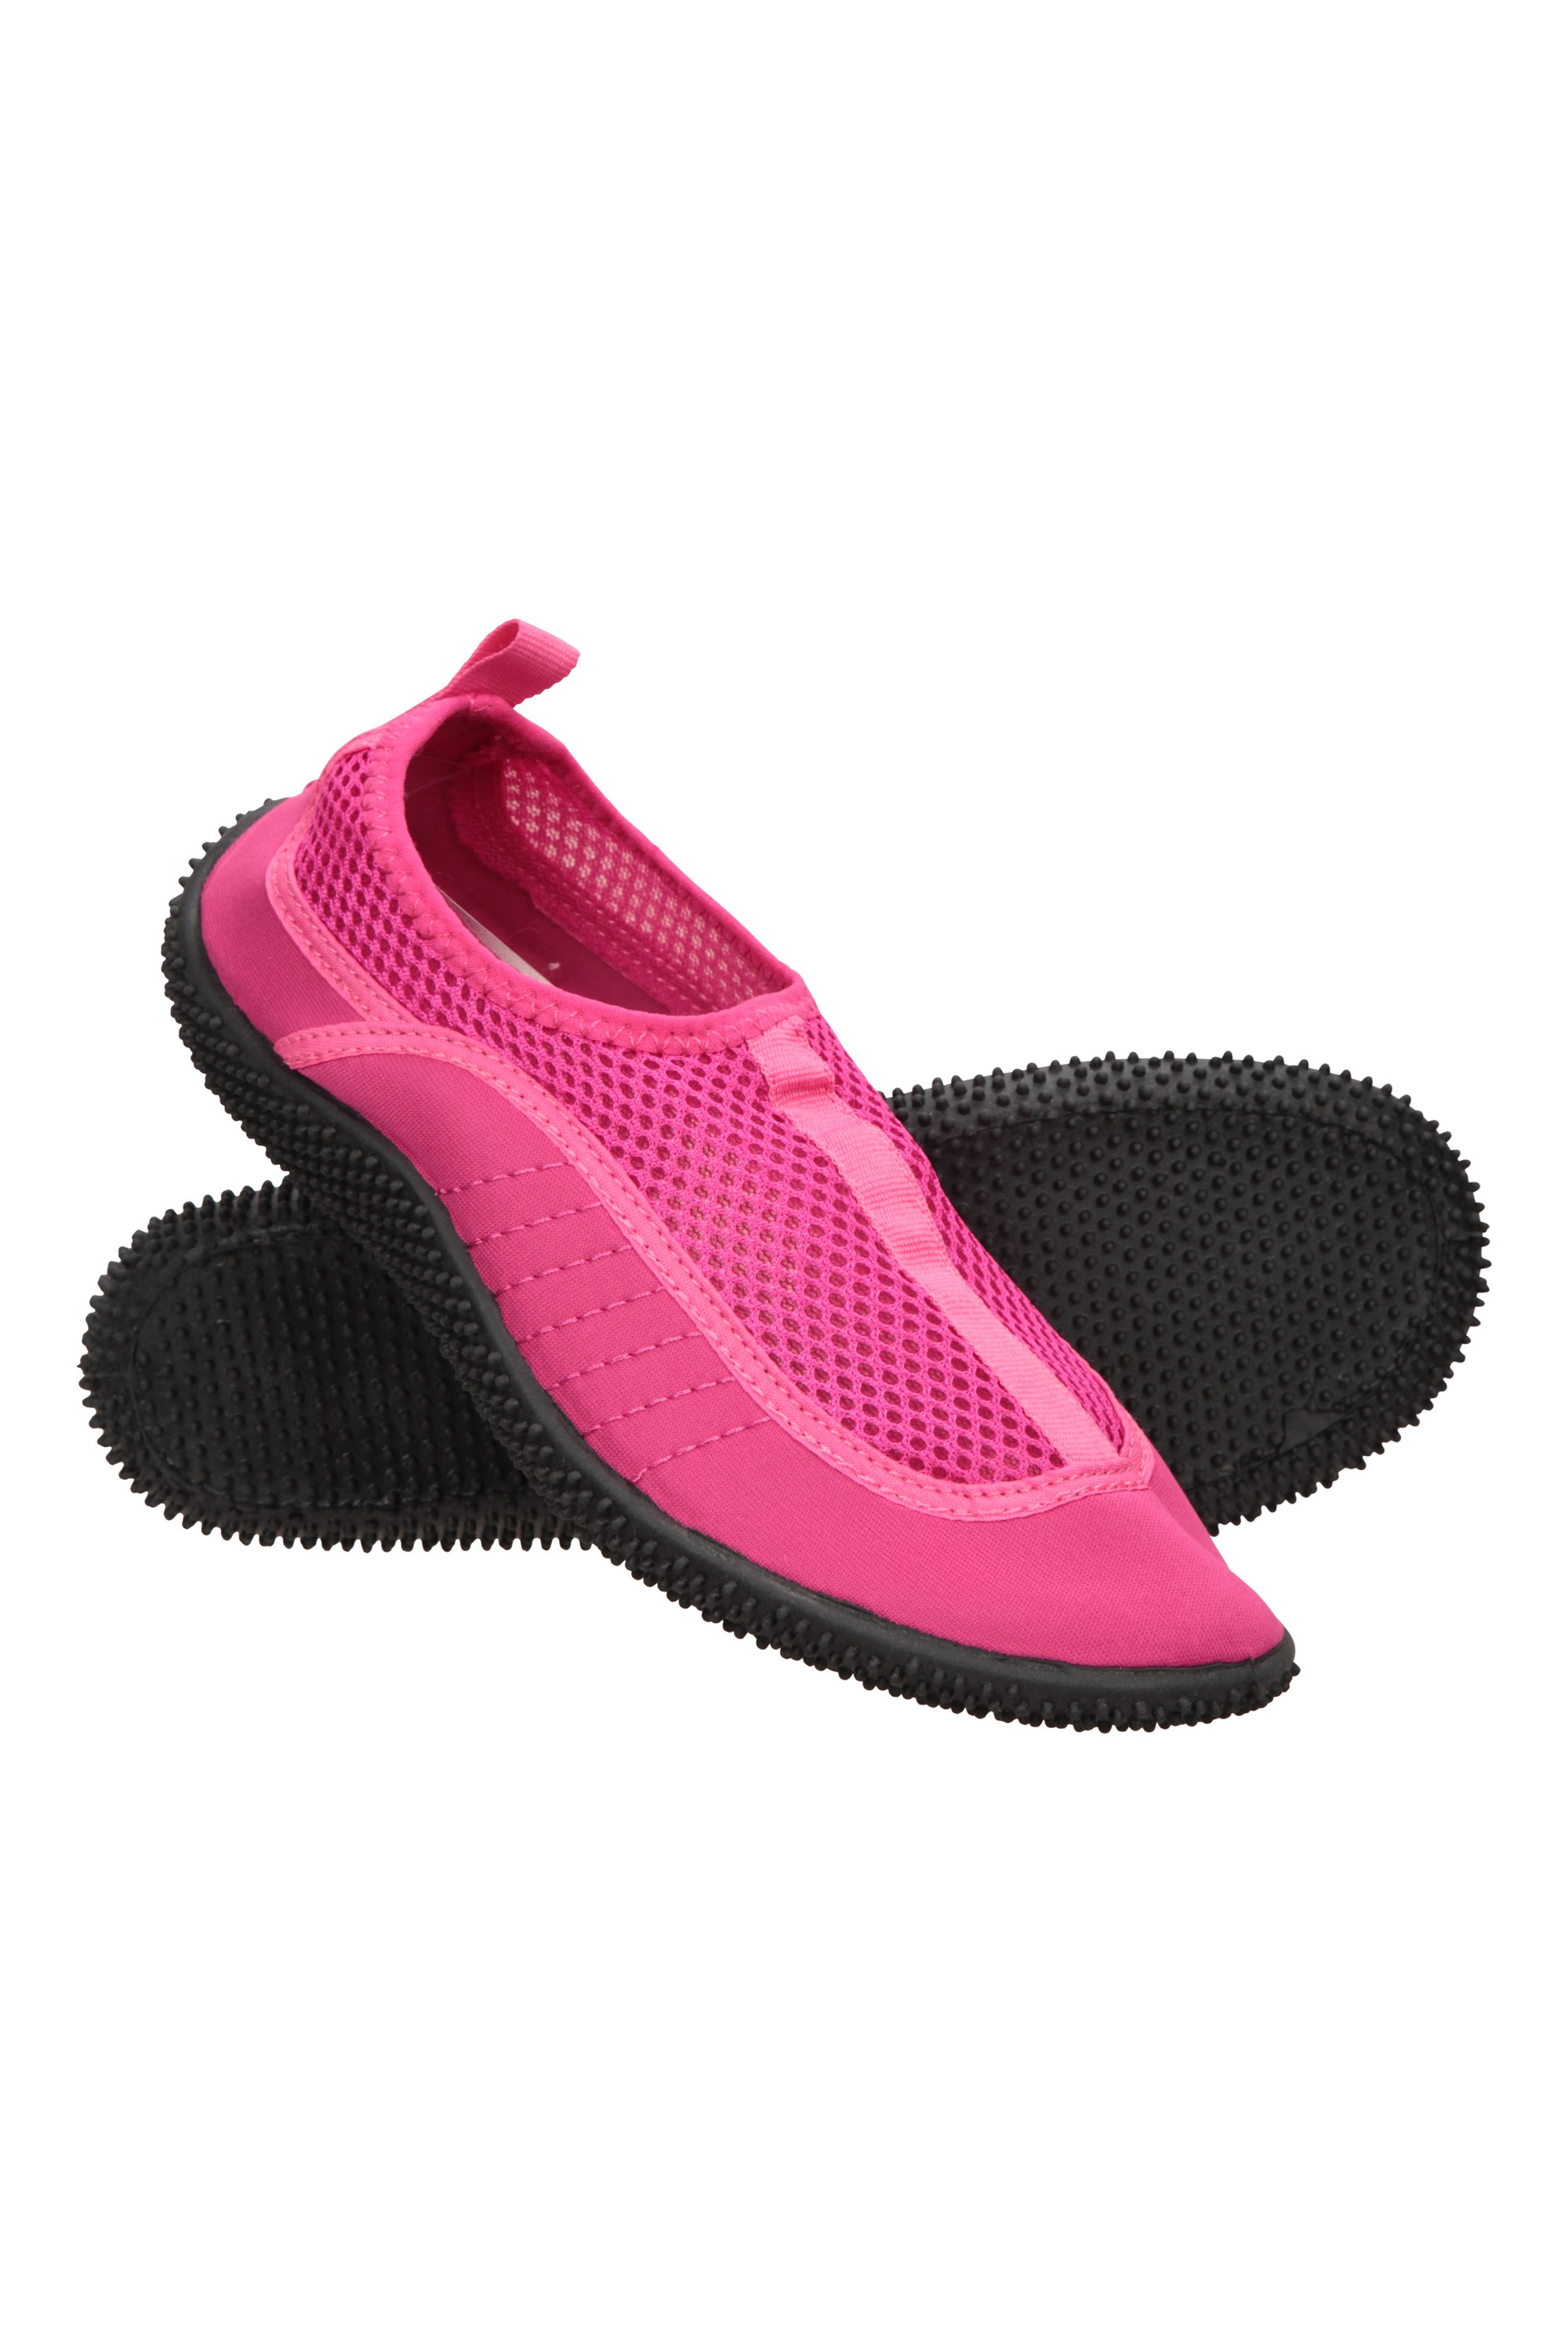 Bermuda Womens Aqua Shoes - Pink